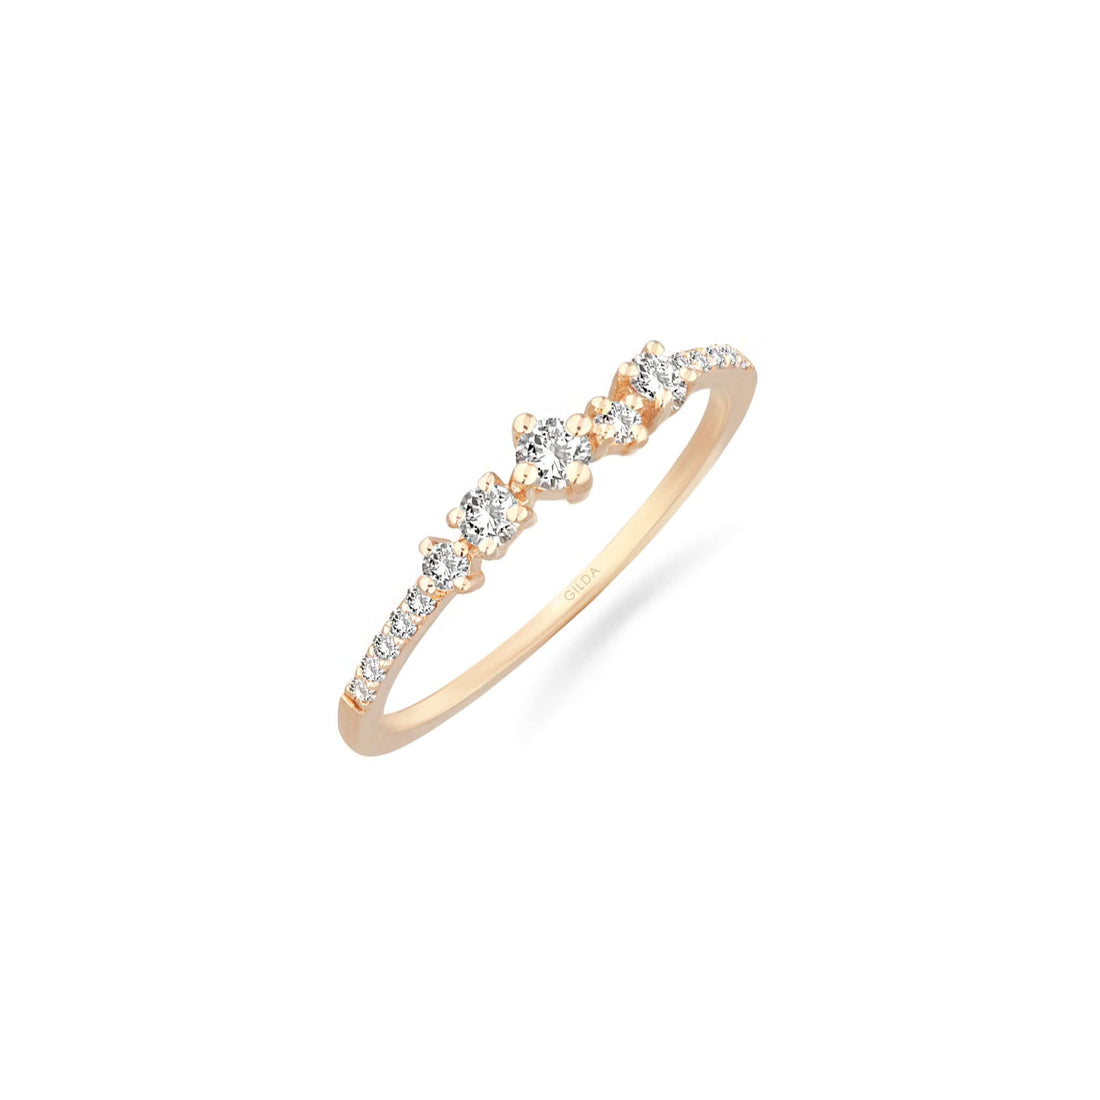 Gilda Jewelry Aya | Diamond Ring | 0.36 Cts. | 14K Gold - ring Zengoda Shop online from Artisan Brands